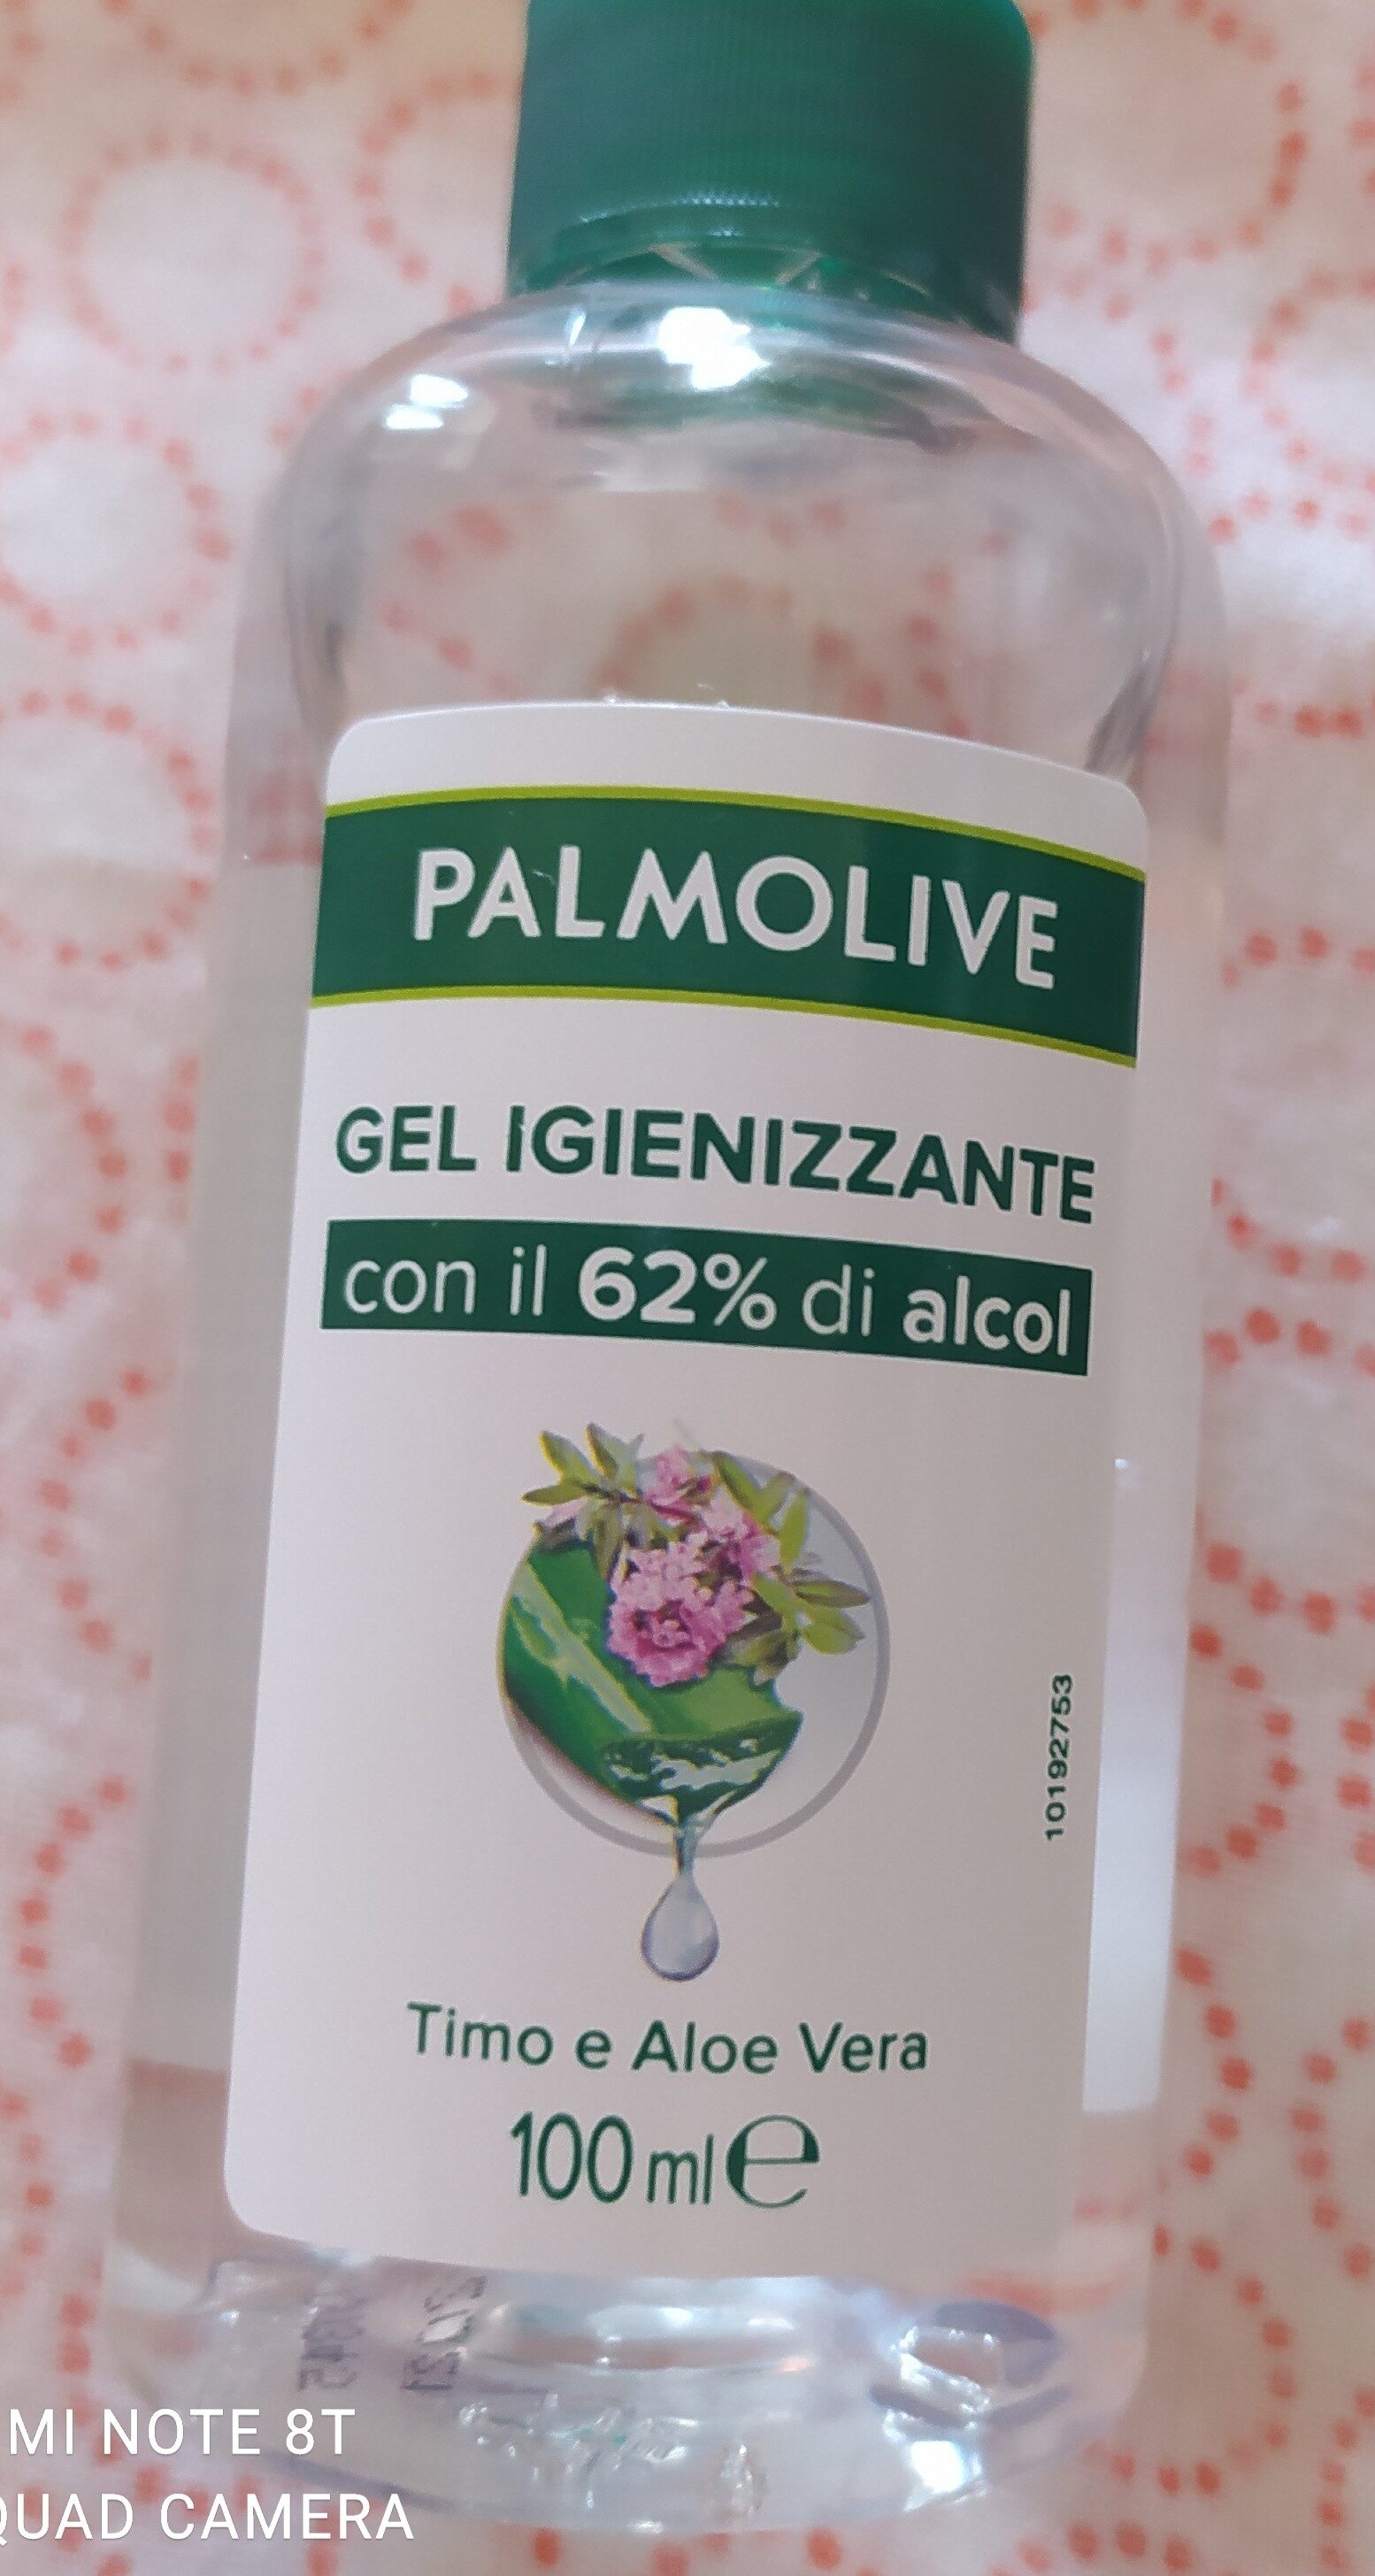 Palmolive - Inhaltsstoffe - ar